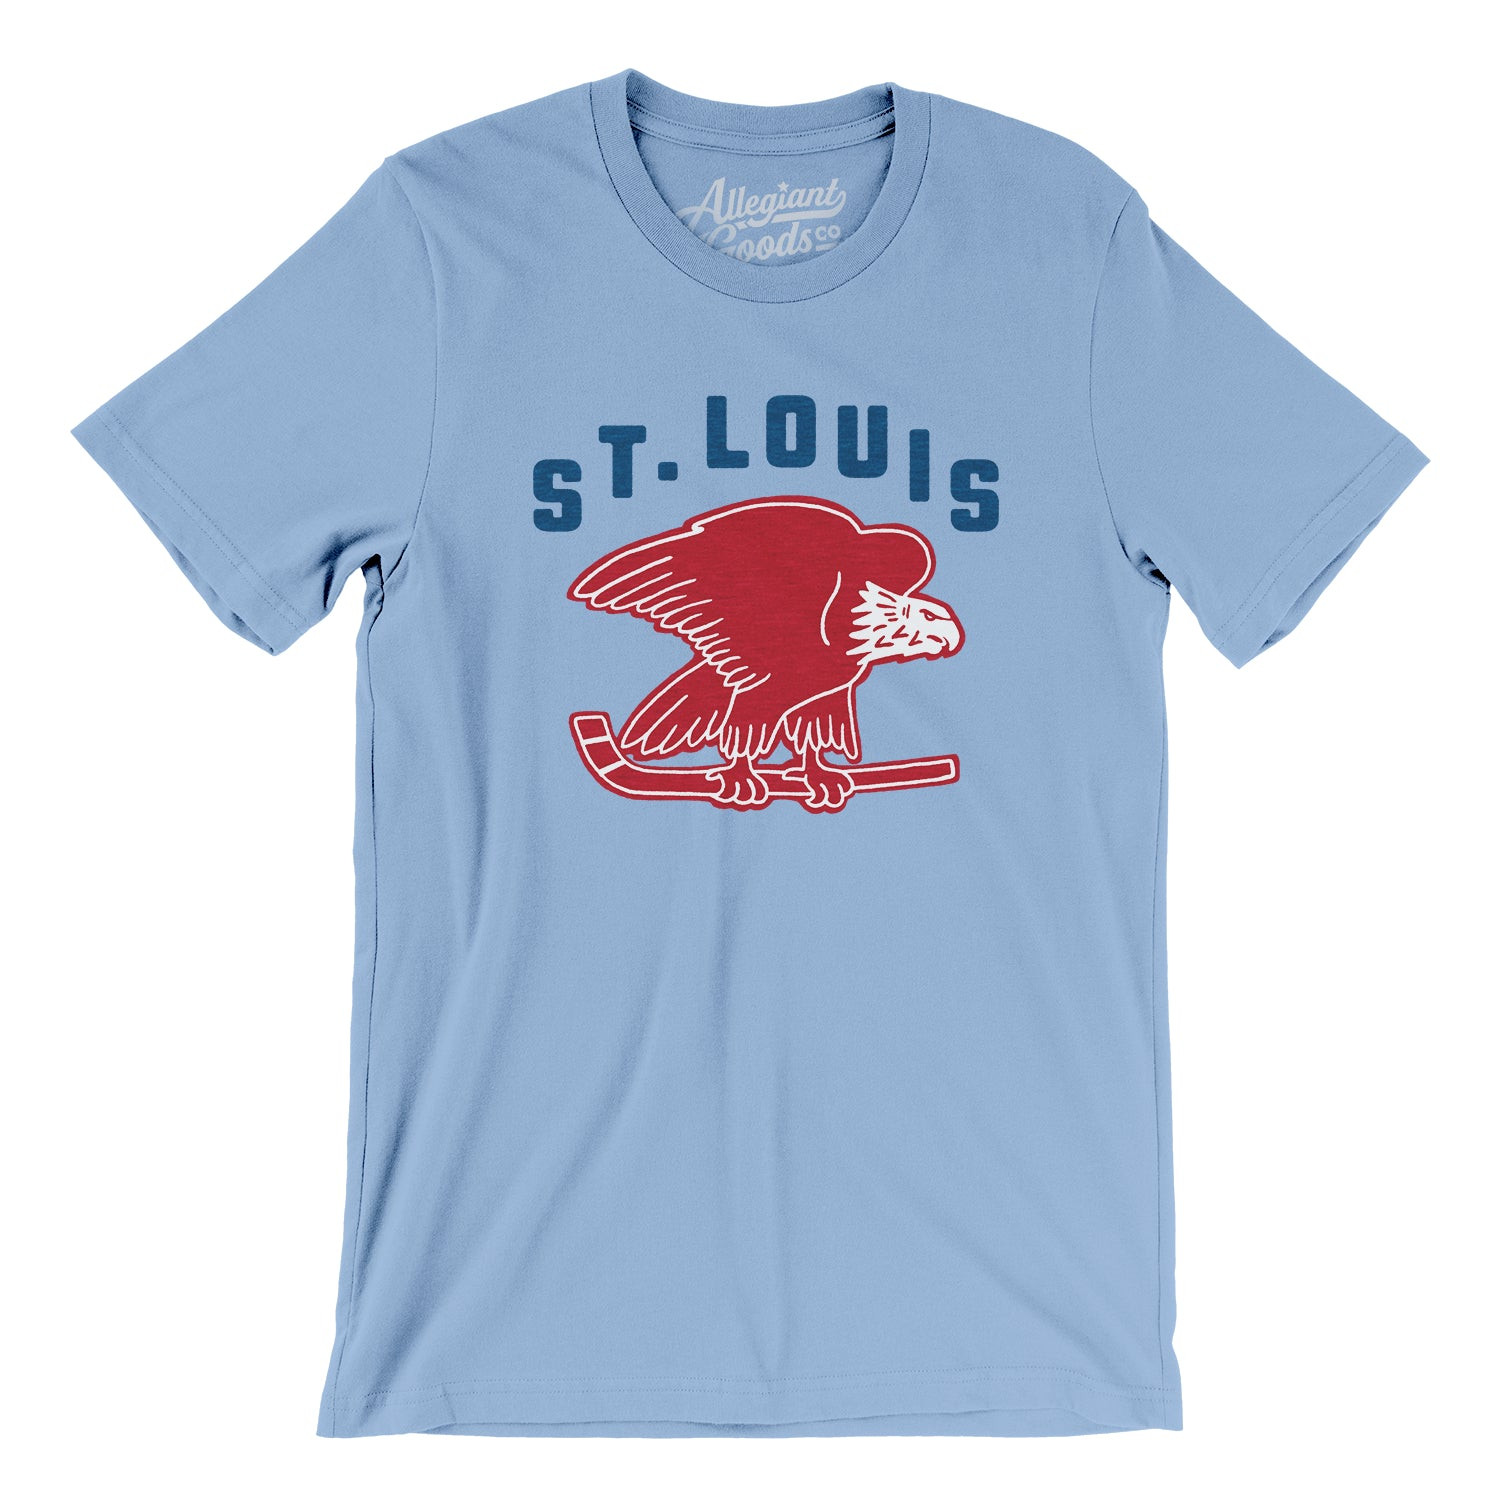 St. Louis Eagles Hockey Men/Unisex T-Shirt